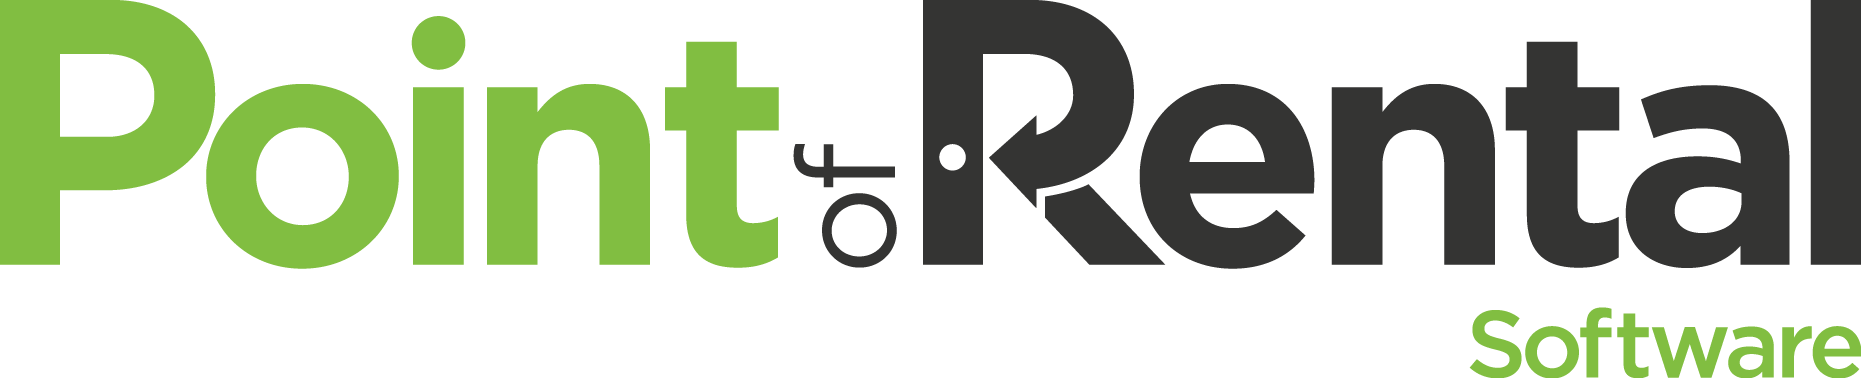 Rental Logo - Home | Point of Rental Software | Rental & Inventory Management Software